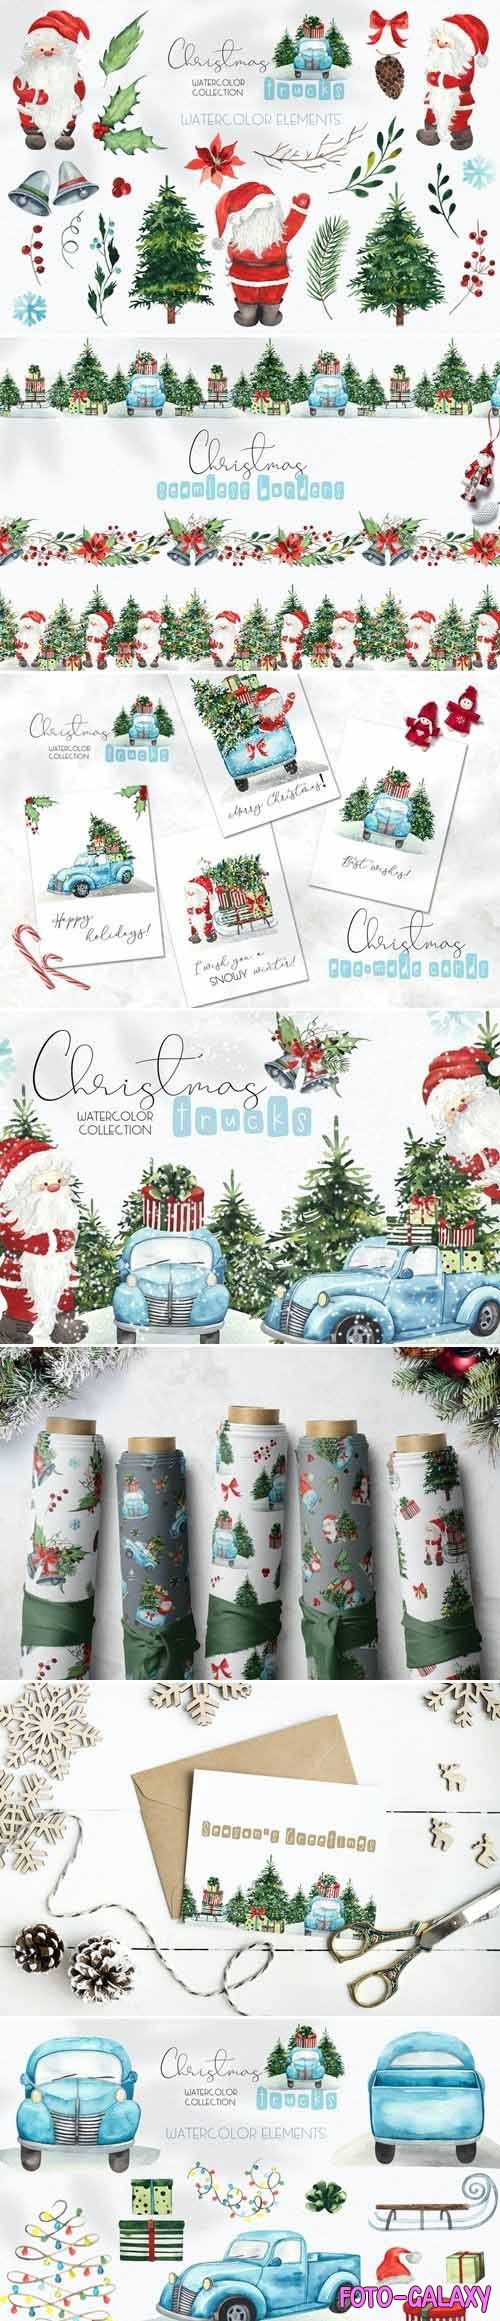 Watercolor Christmas trucks - 5428563